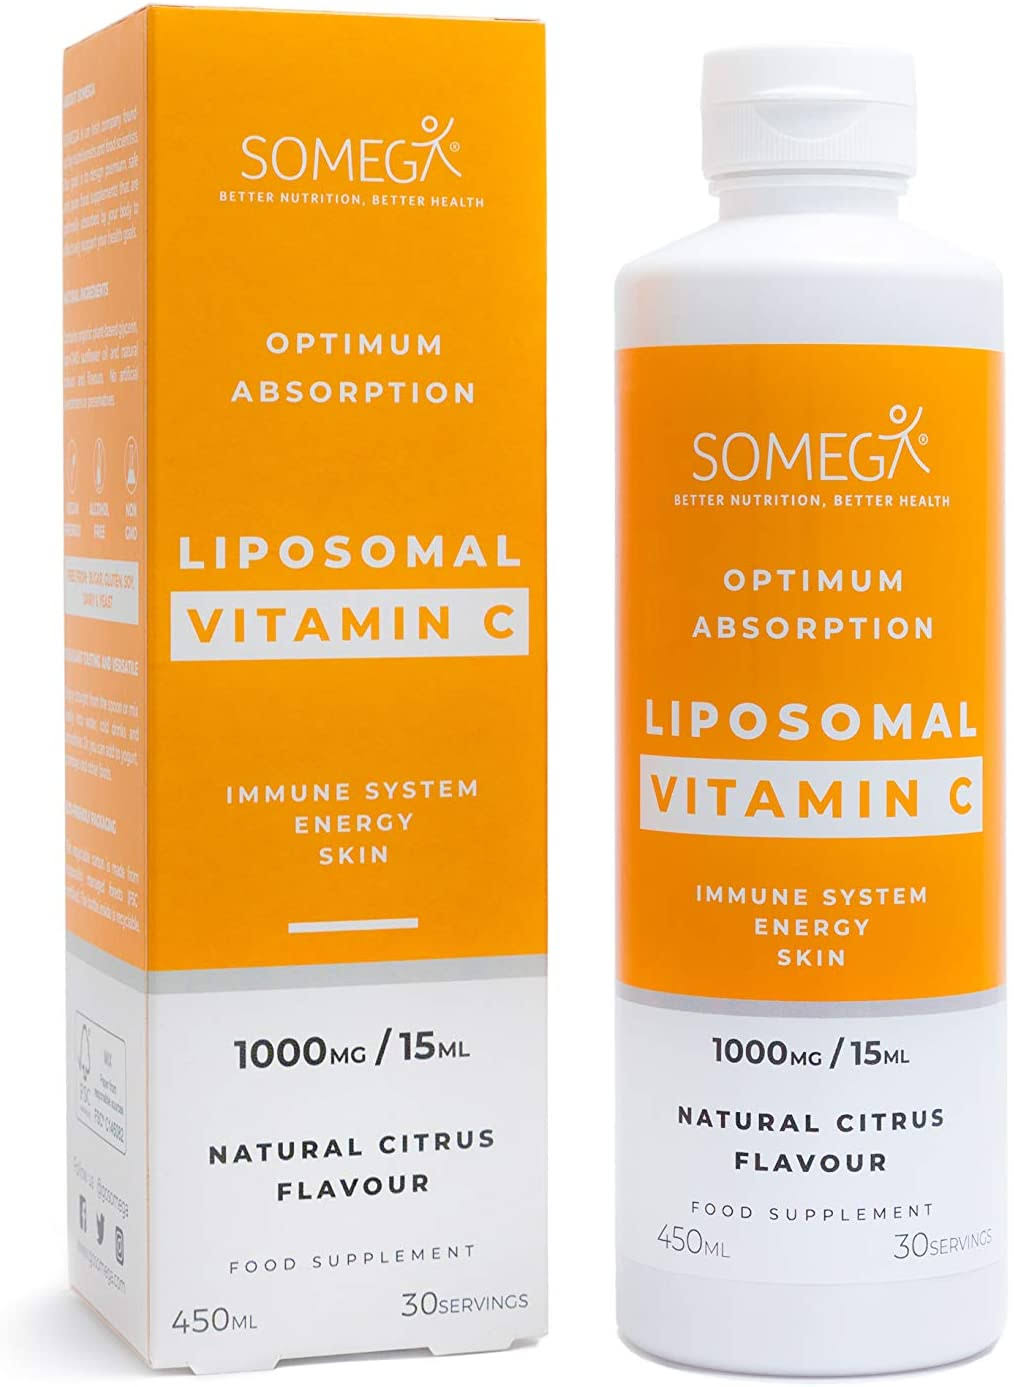 SOMEGA Liposomal Vitamin C Citrus Flavour Liquid 1000mg Serving Vegan Friendly Natural Ingredients Alcohol Free